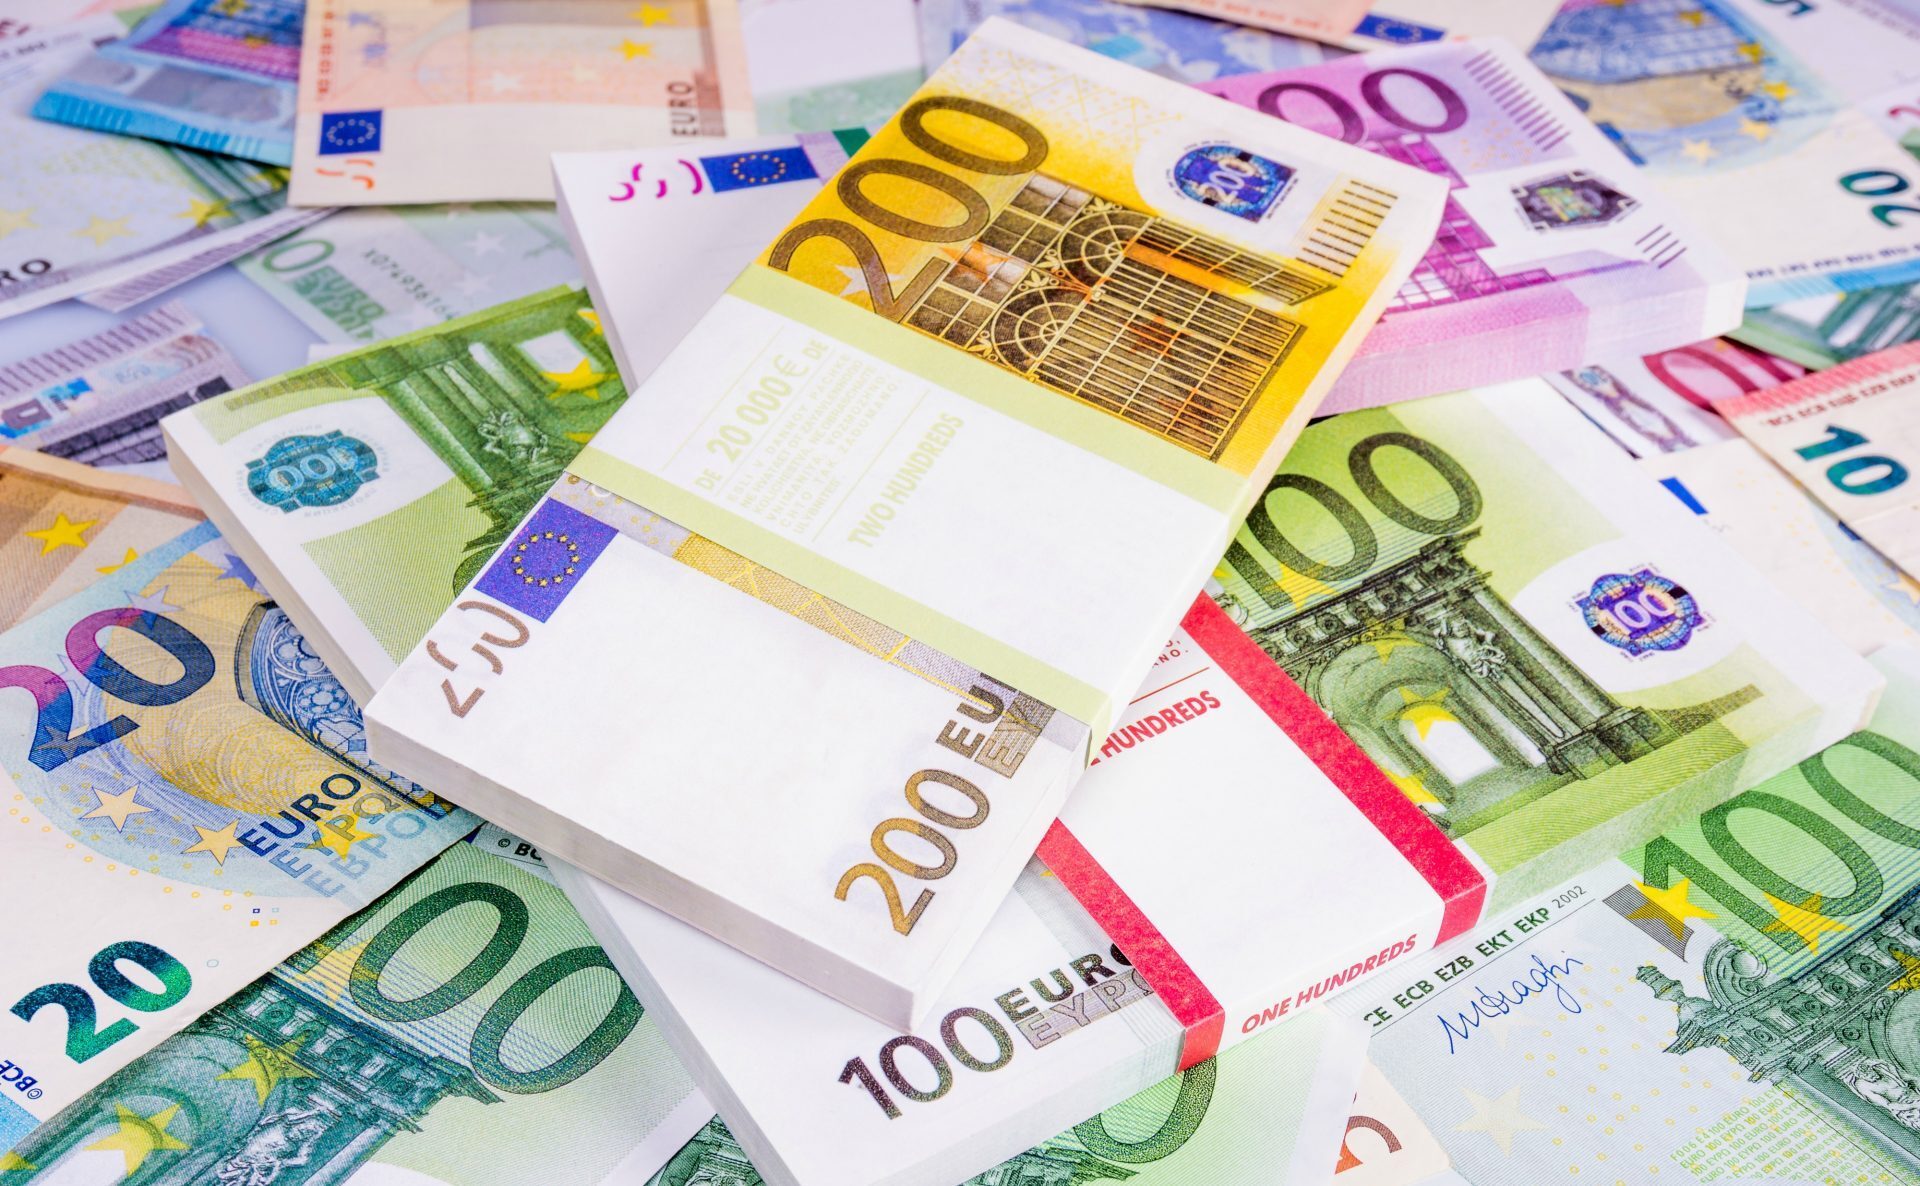 Euro currency. Деньги евро. Евро валюта. Банкноты евро. Изображение евро купюр.